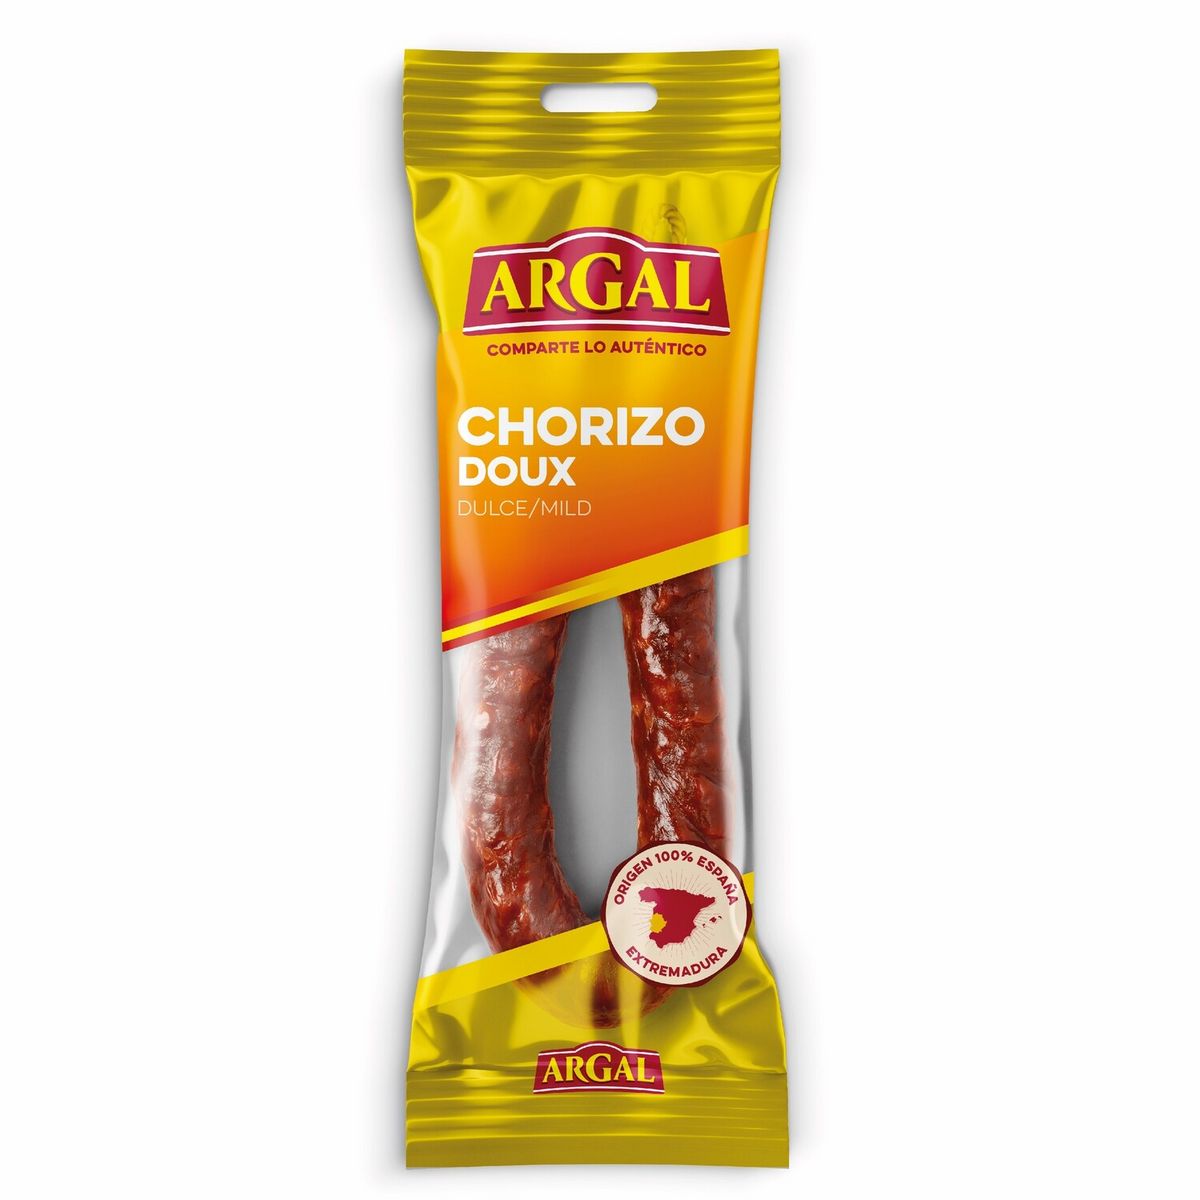 ARGAL Chorizo doux 200g